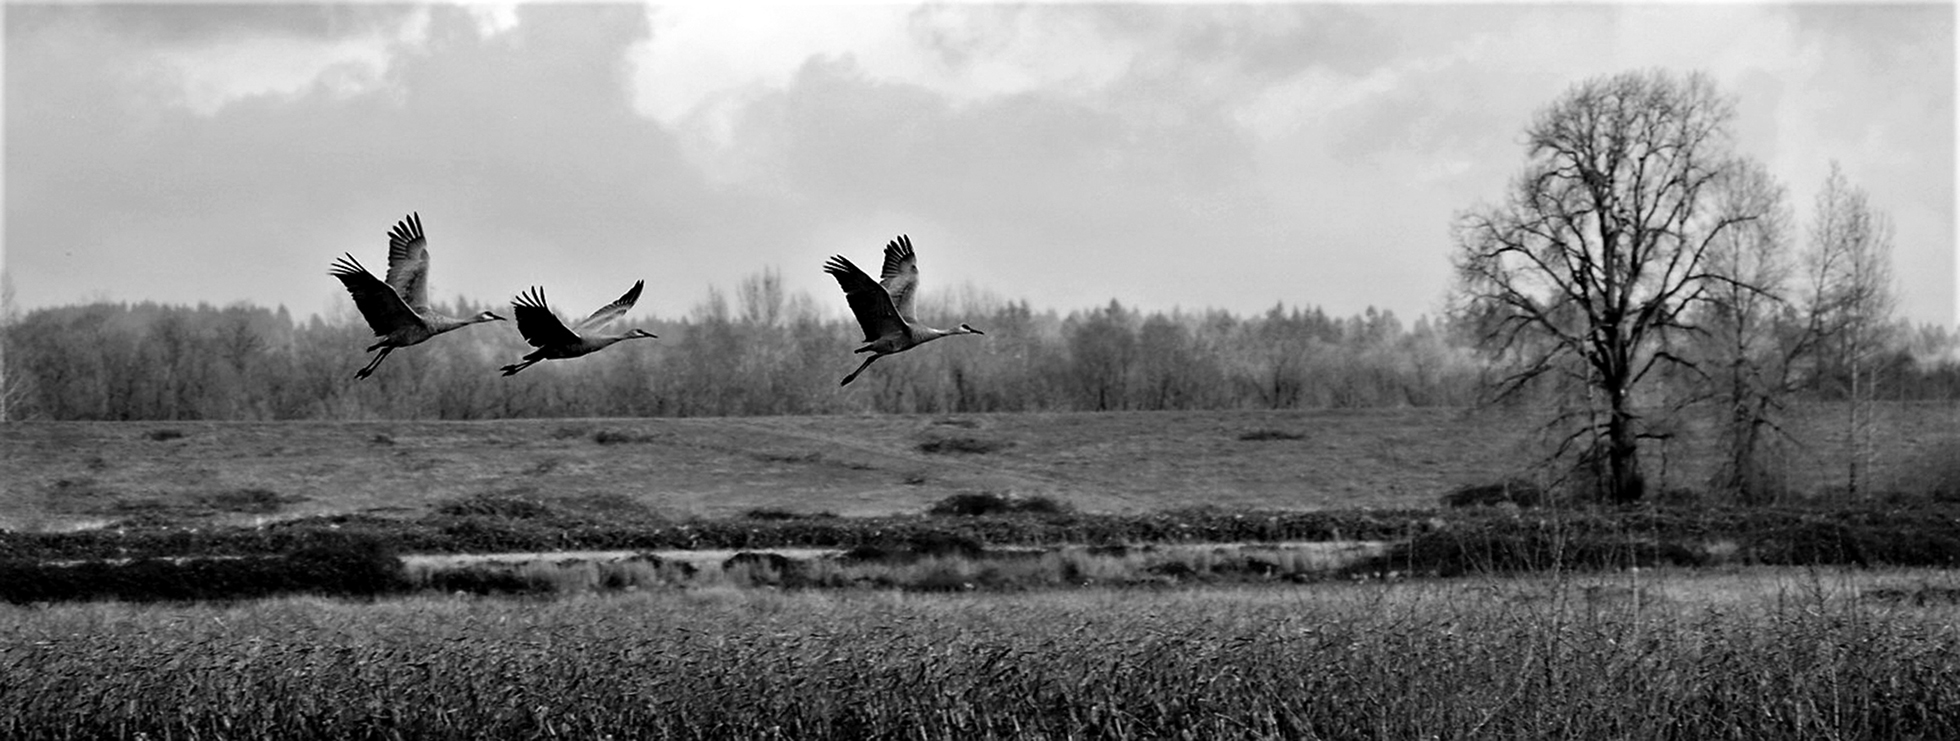 Three large birds in flight.